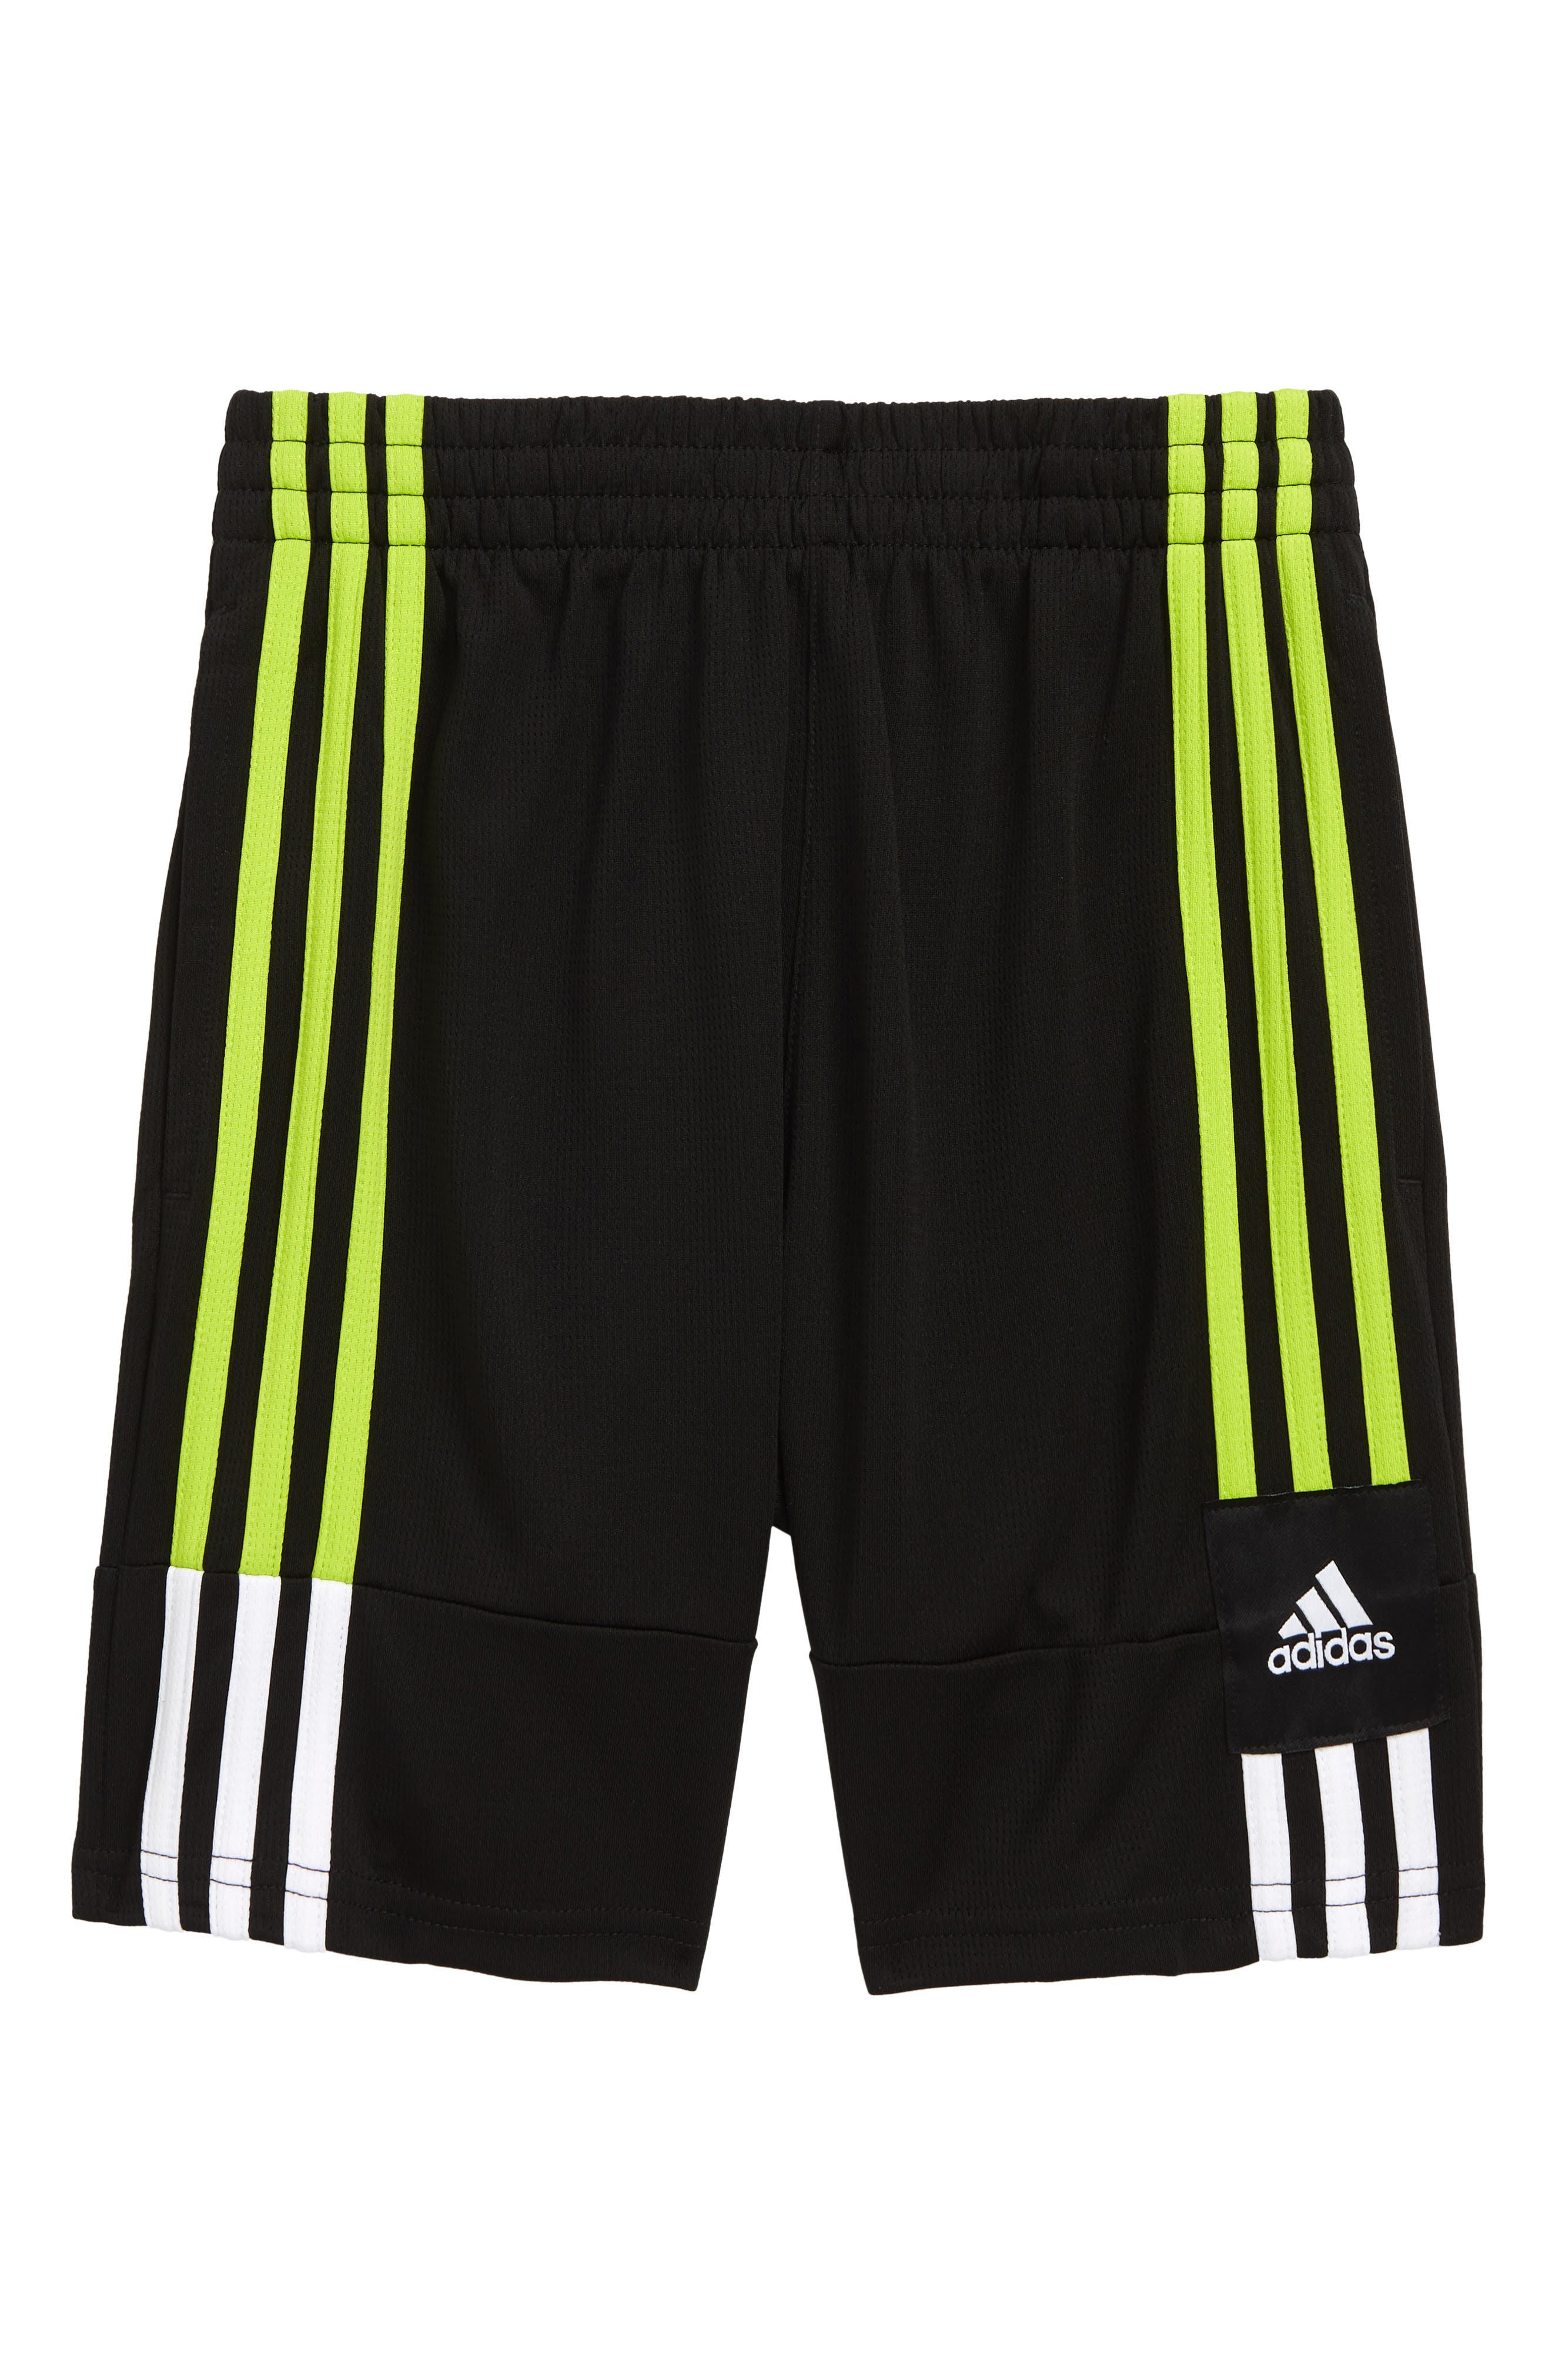 Adidas Originals Kids' Seasonal 3g Speed X Shorts In Black W/ Lime Green